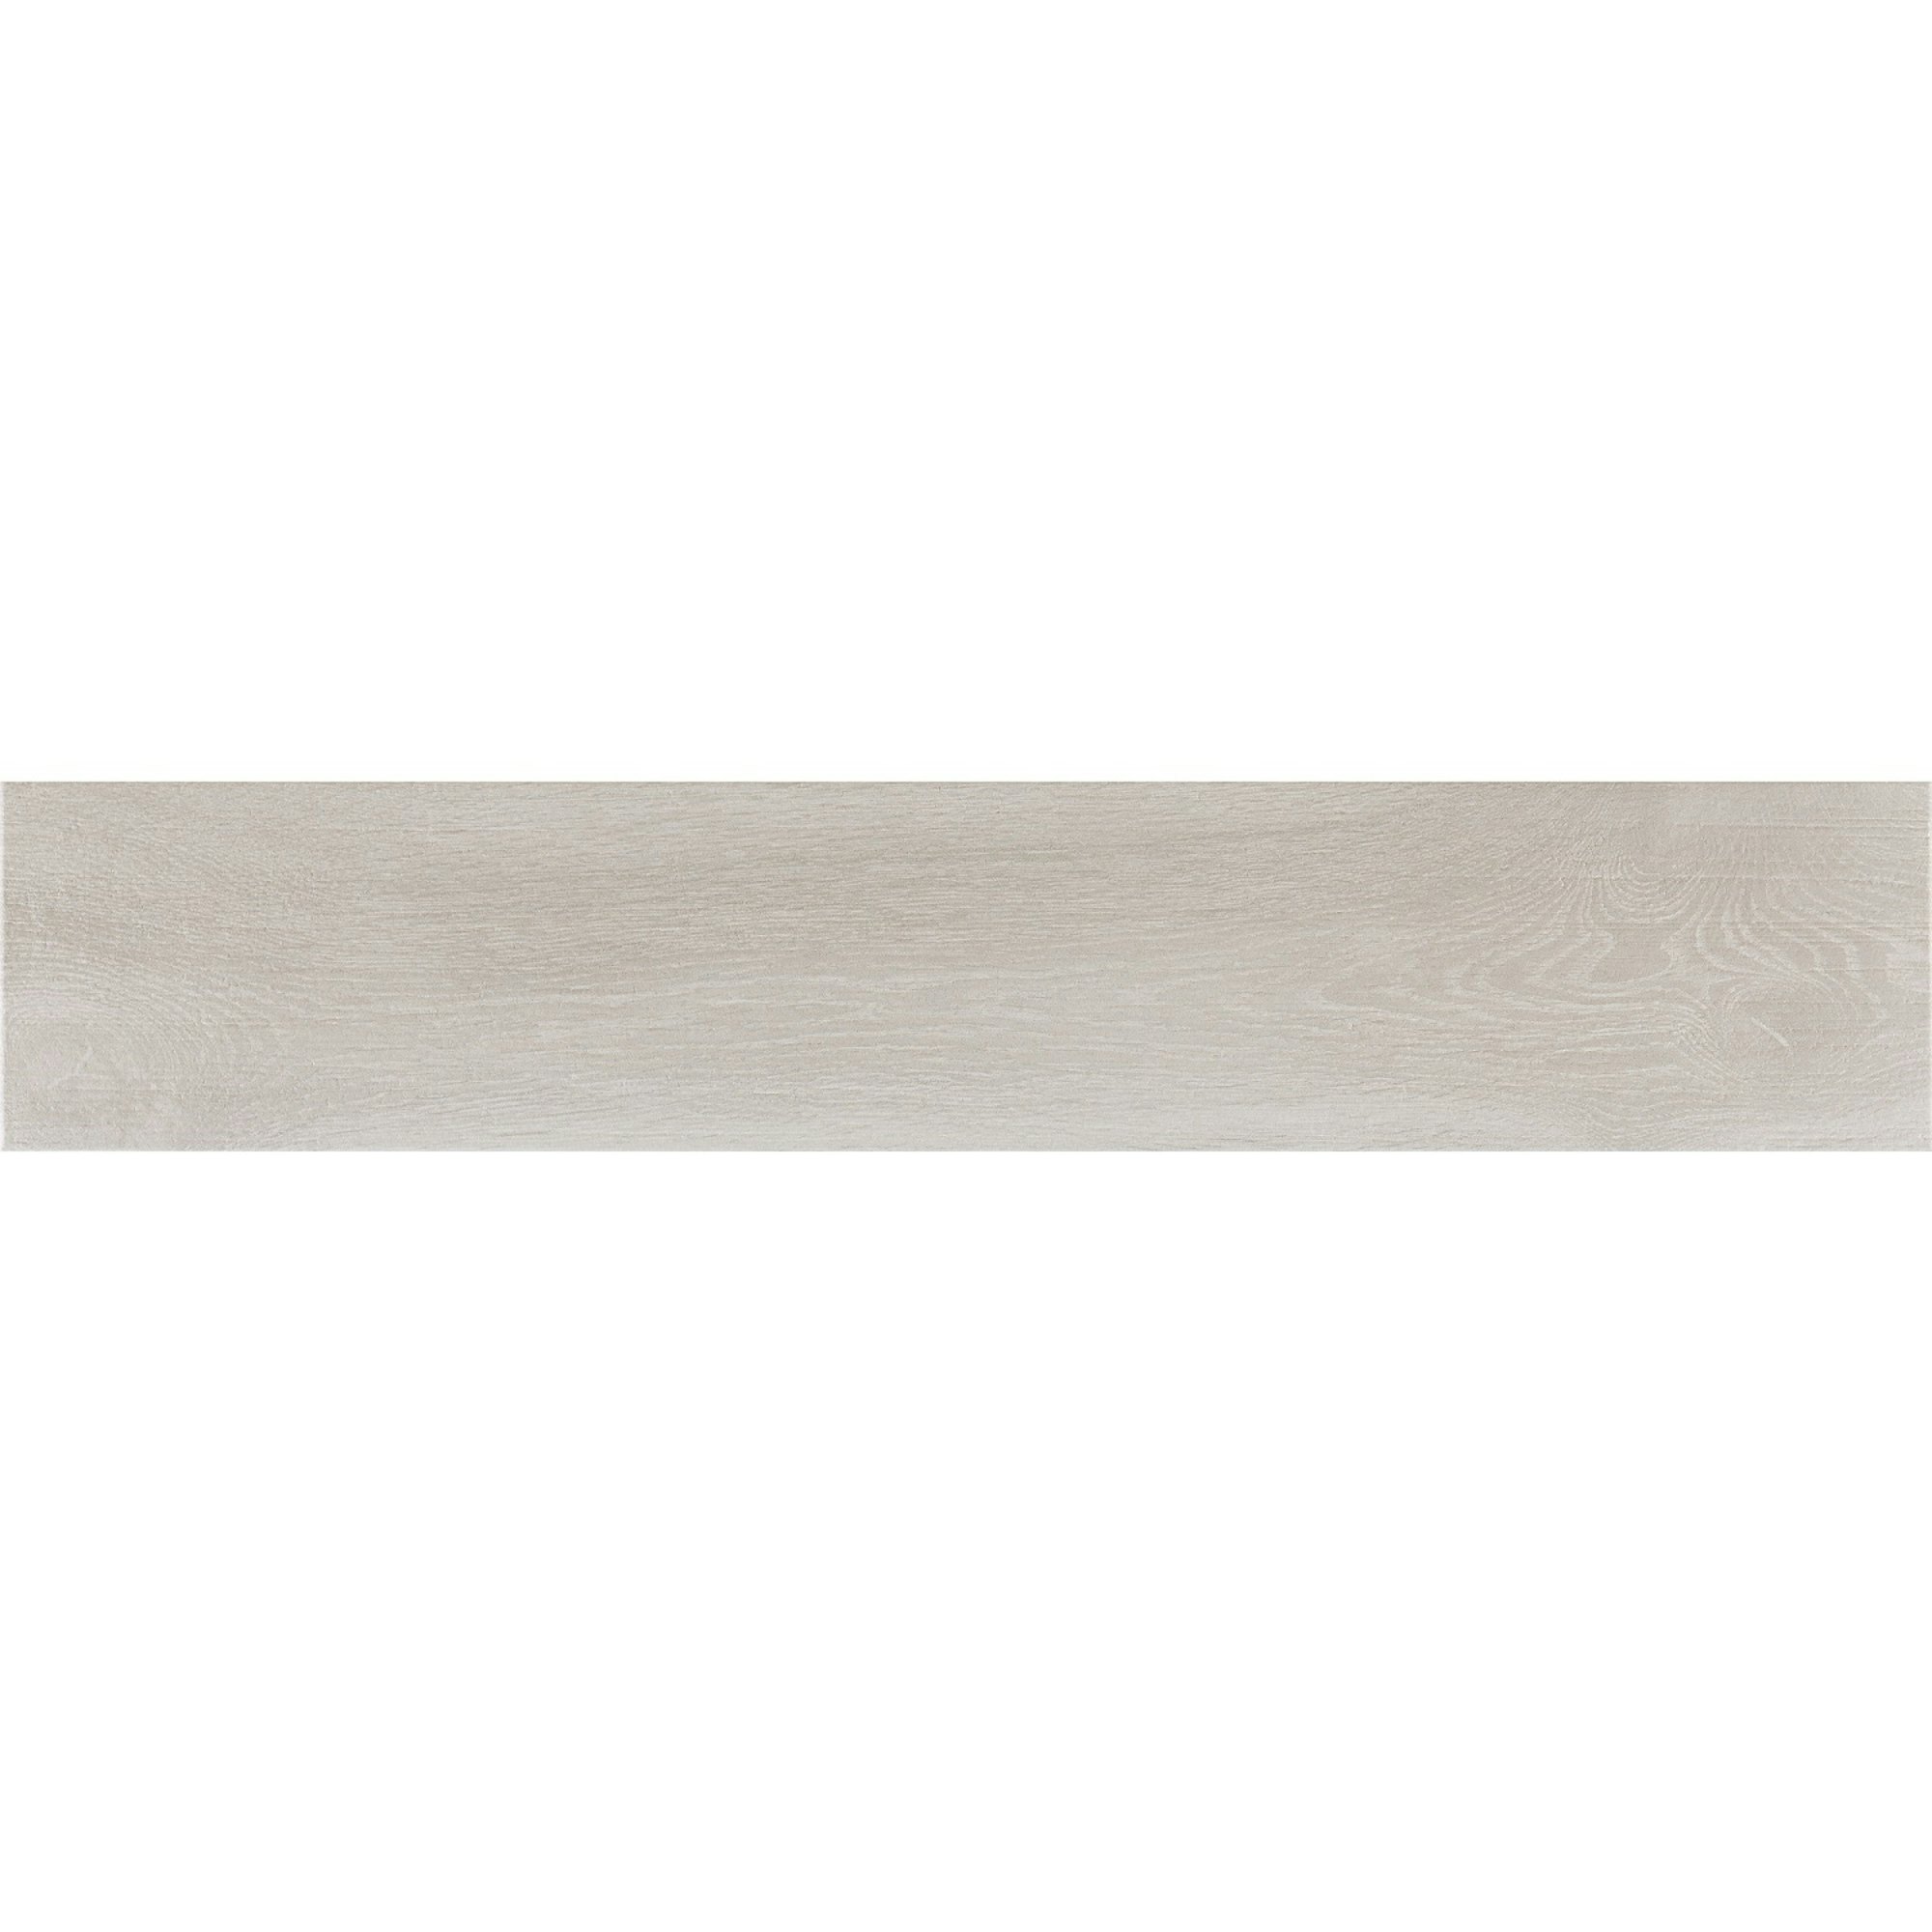 Chudleigh Blanco Wood Effect Tile